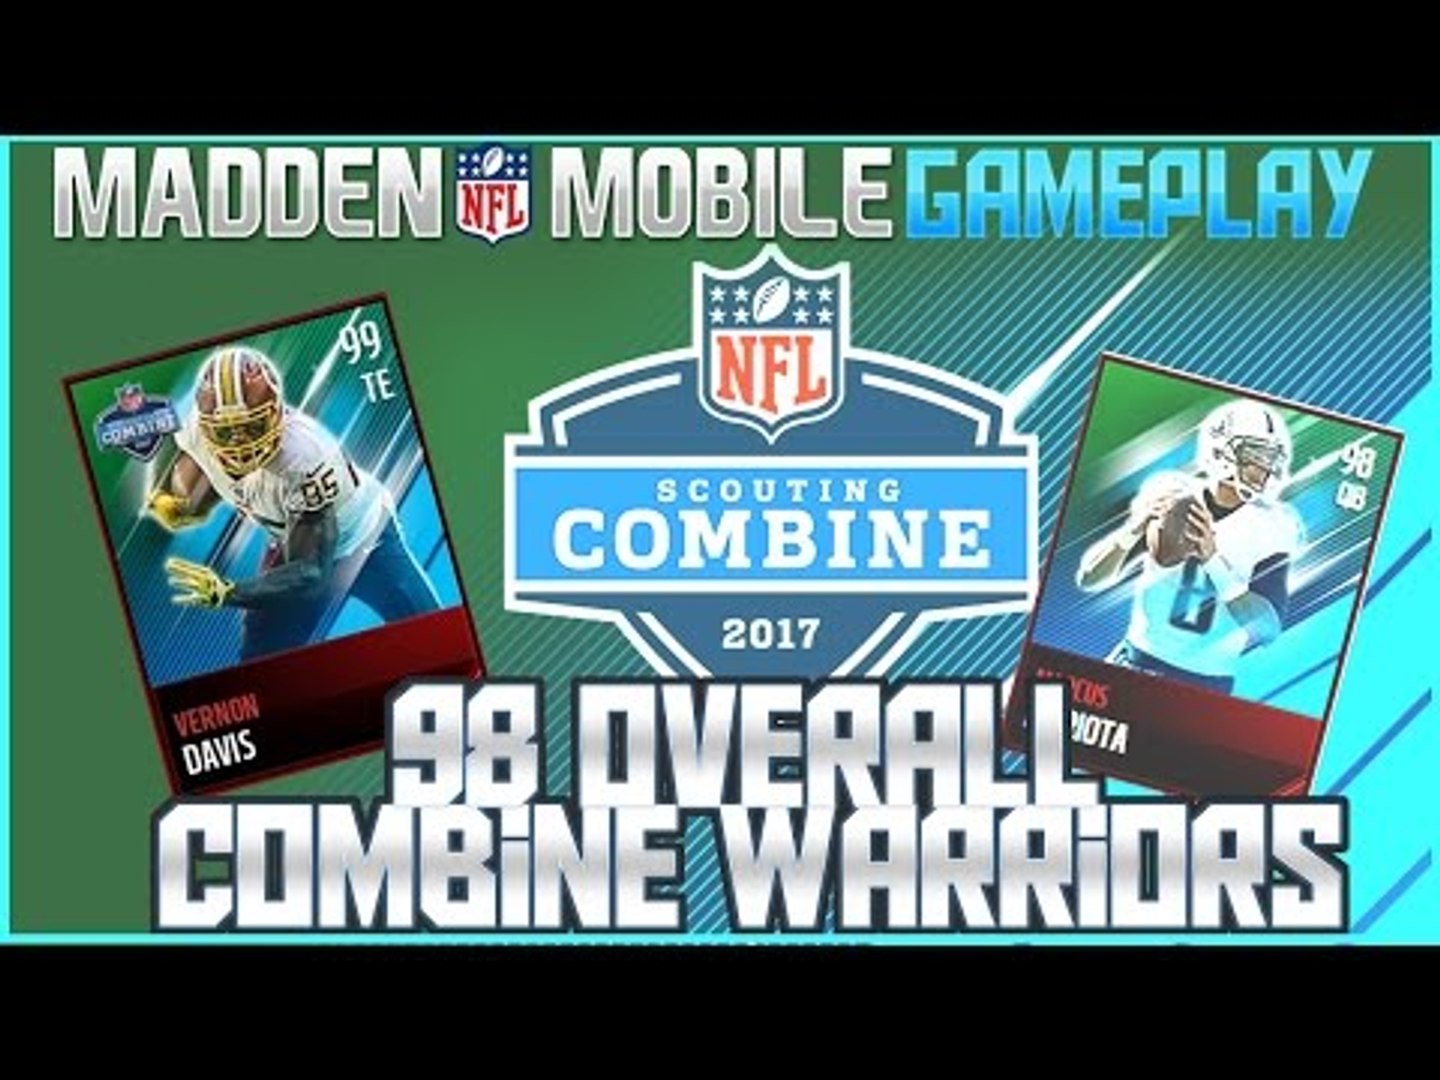 Madden NFL Mobile Gameplay: 98 OVR COMBINE WARRIORS! - video